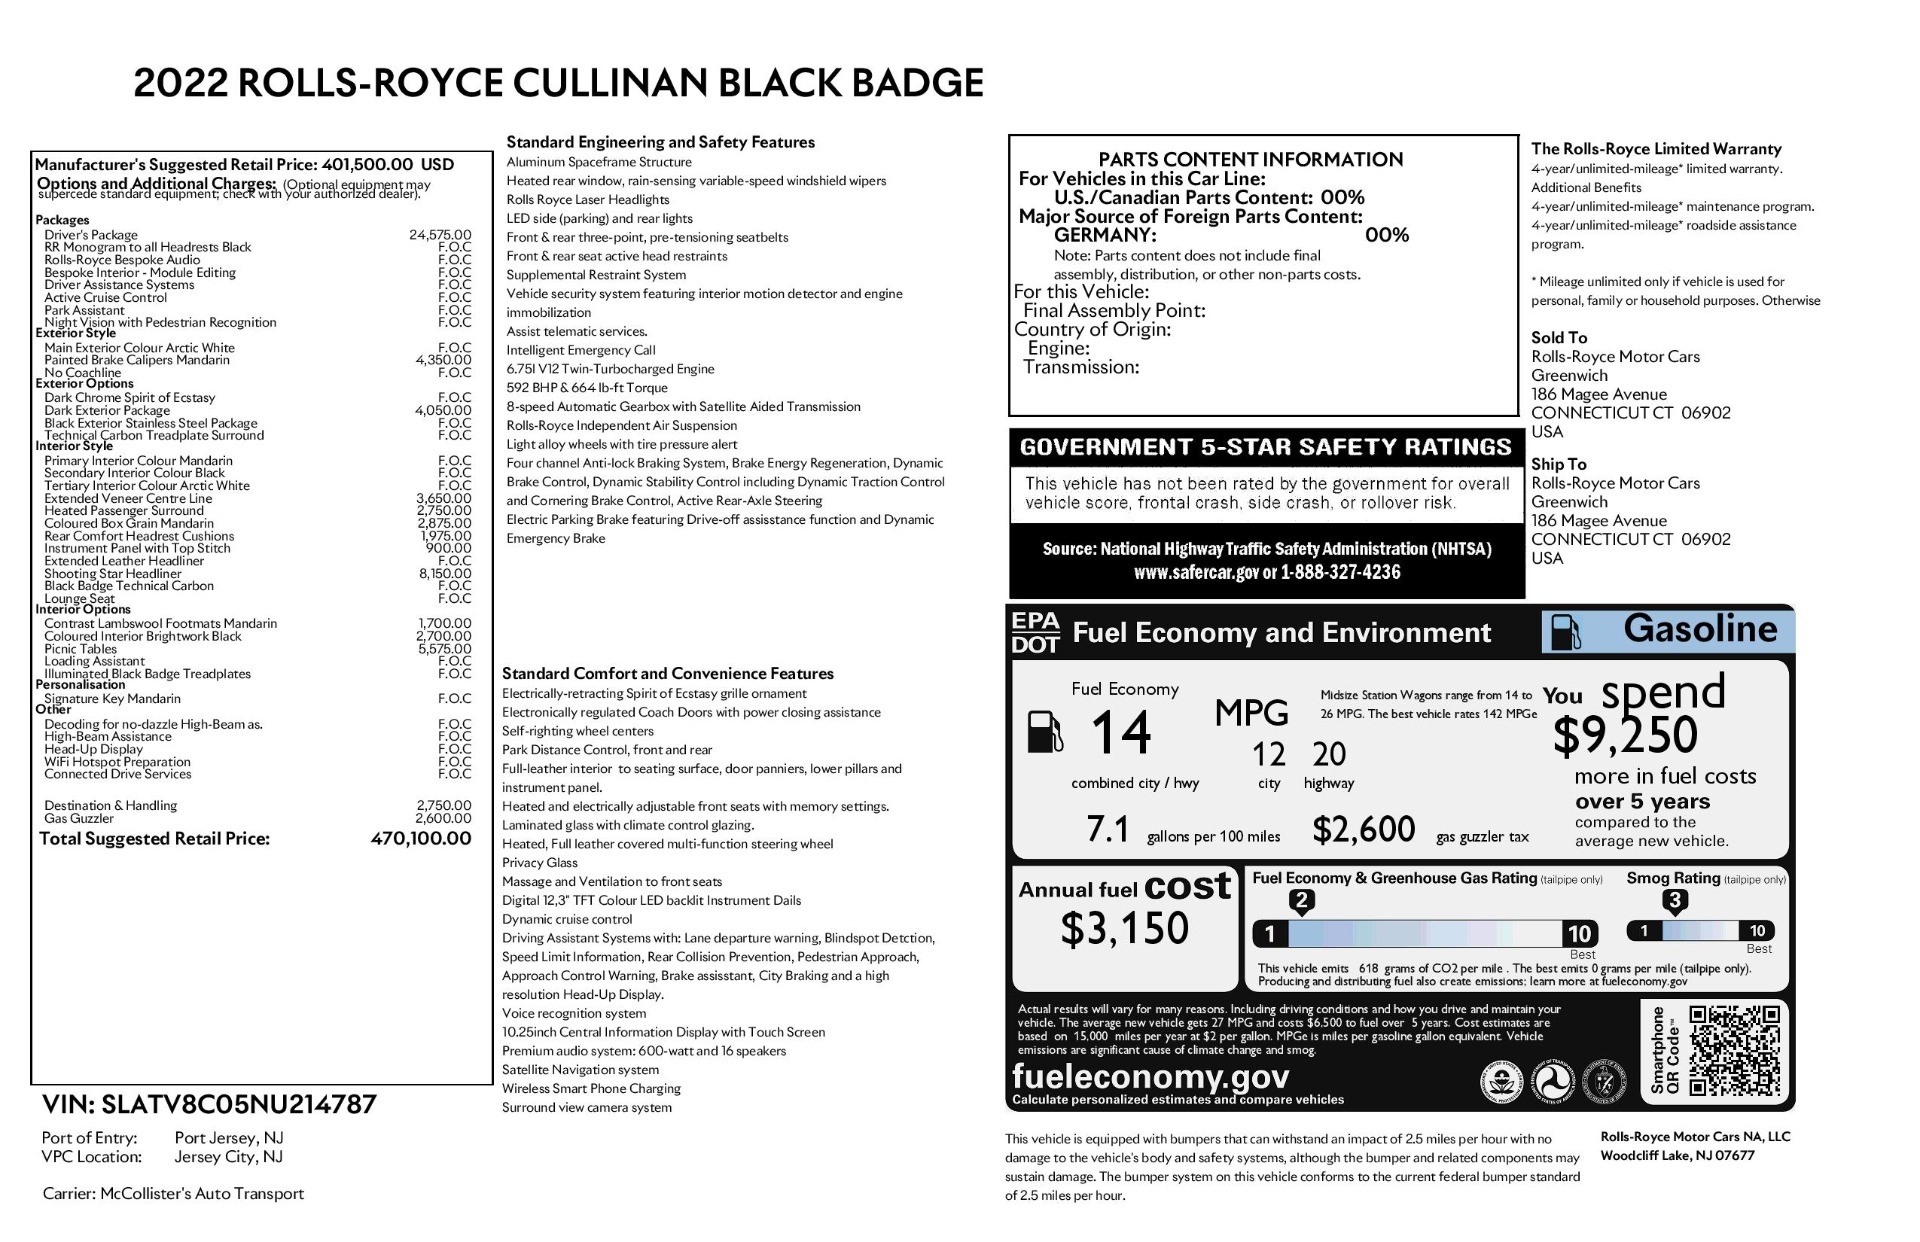 New 2022 Rolls Royce Cullinan Black Badge